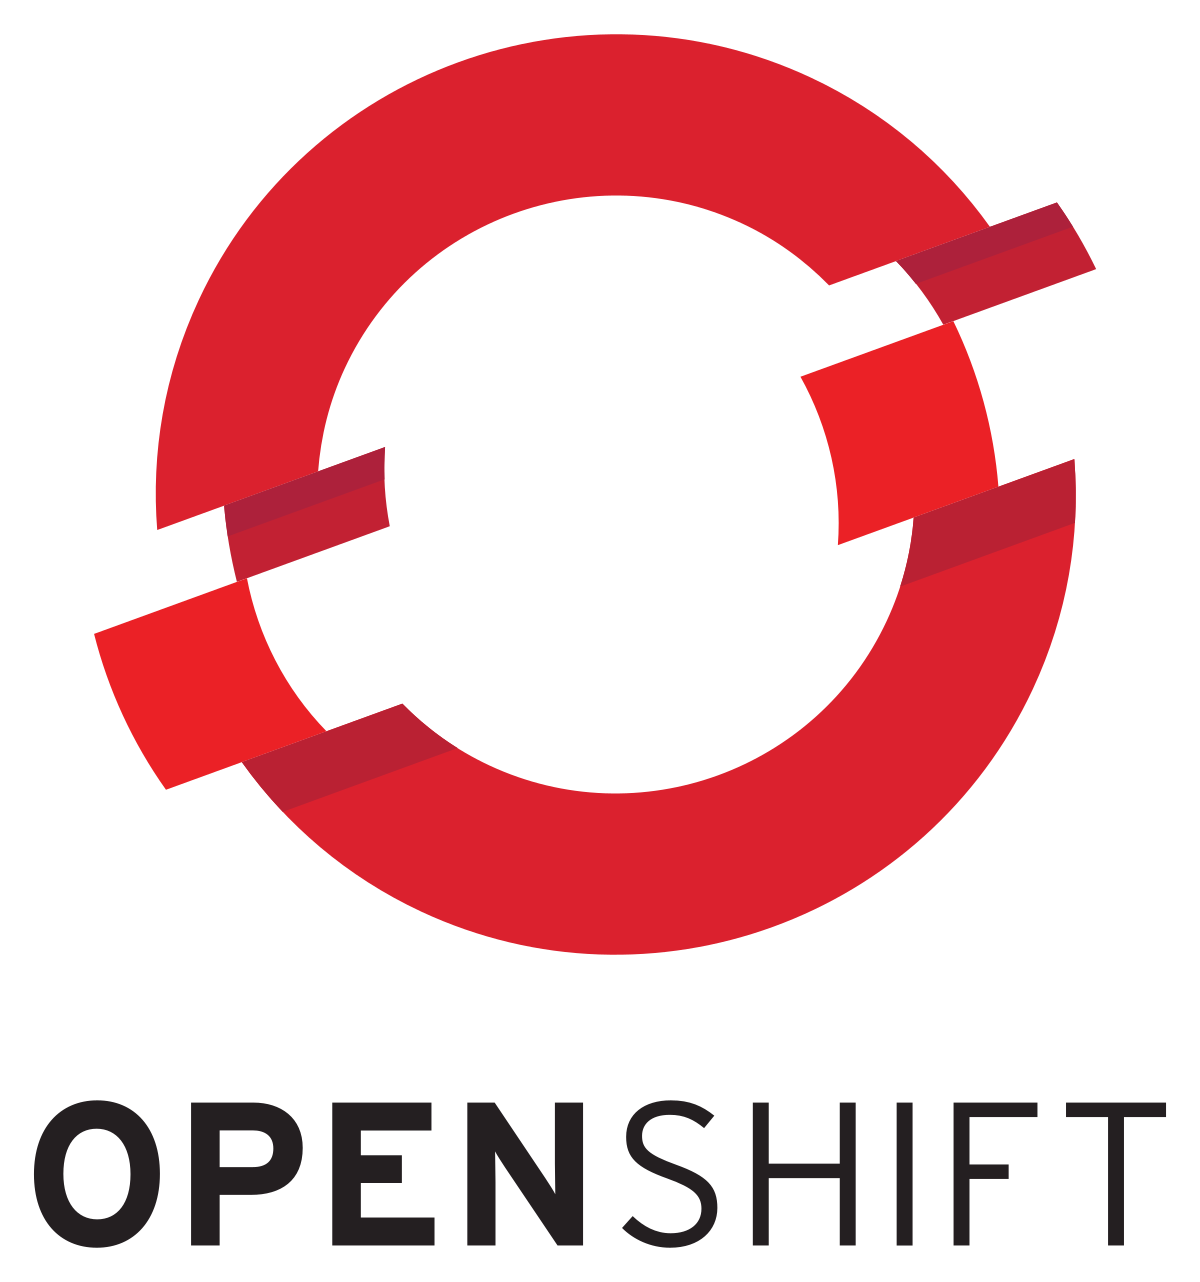 Installing Openshift into a VM